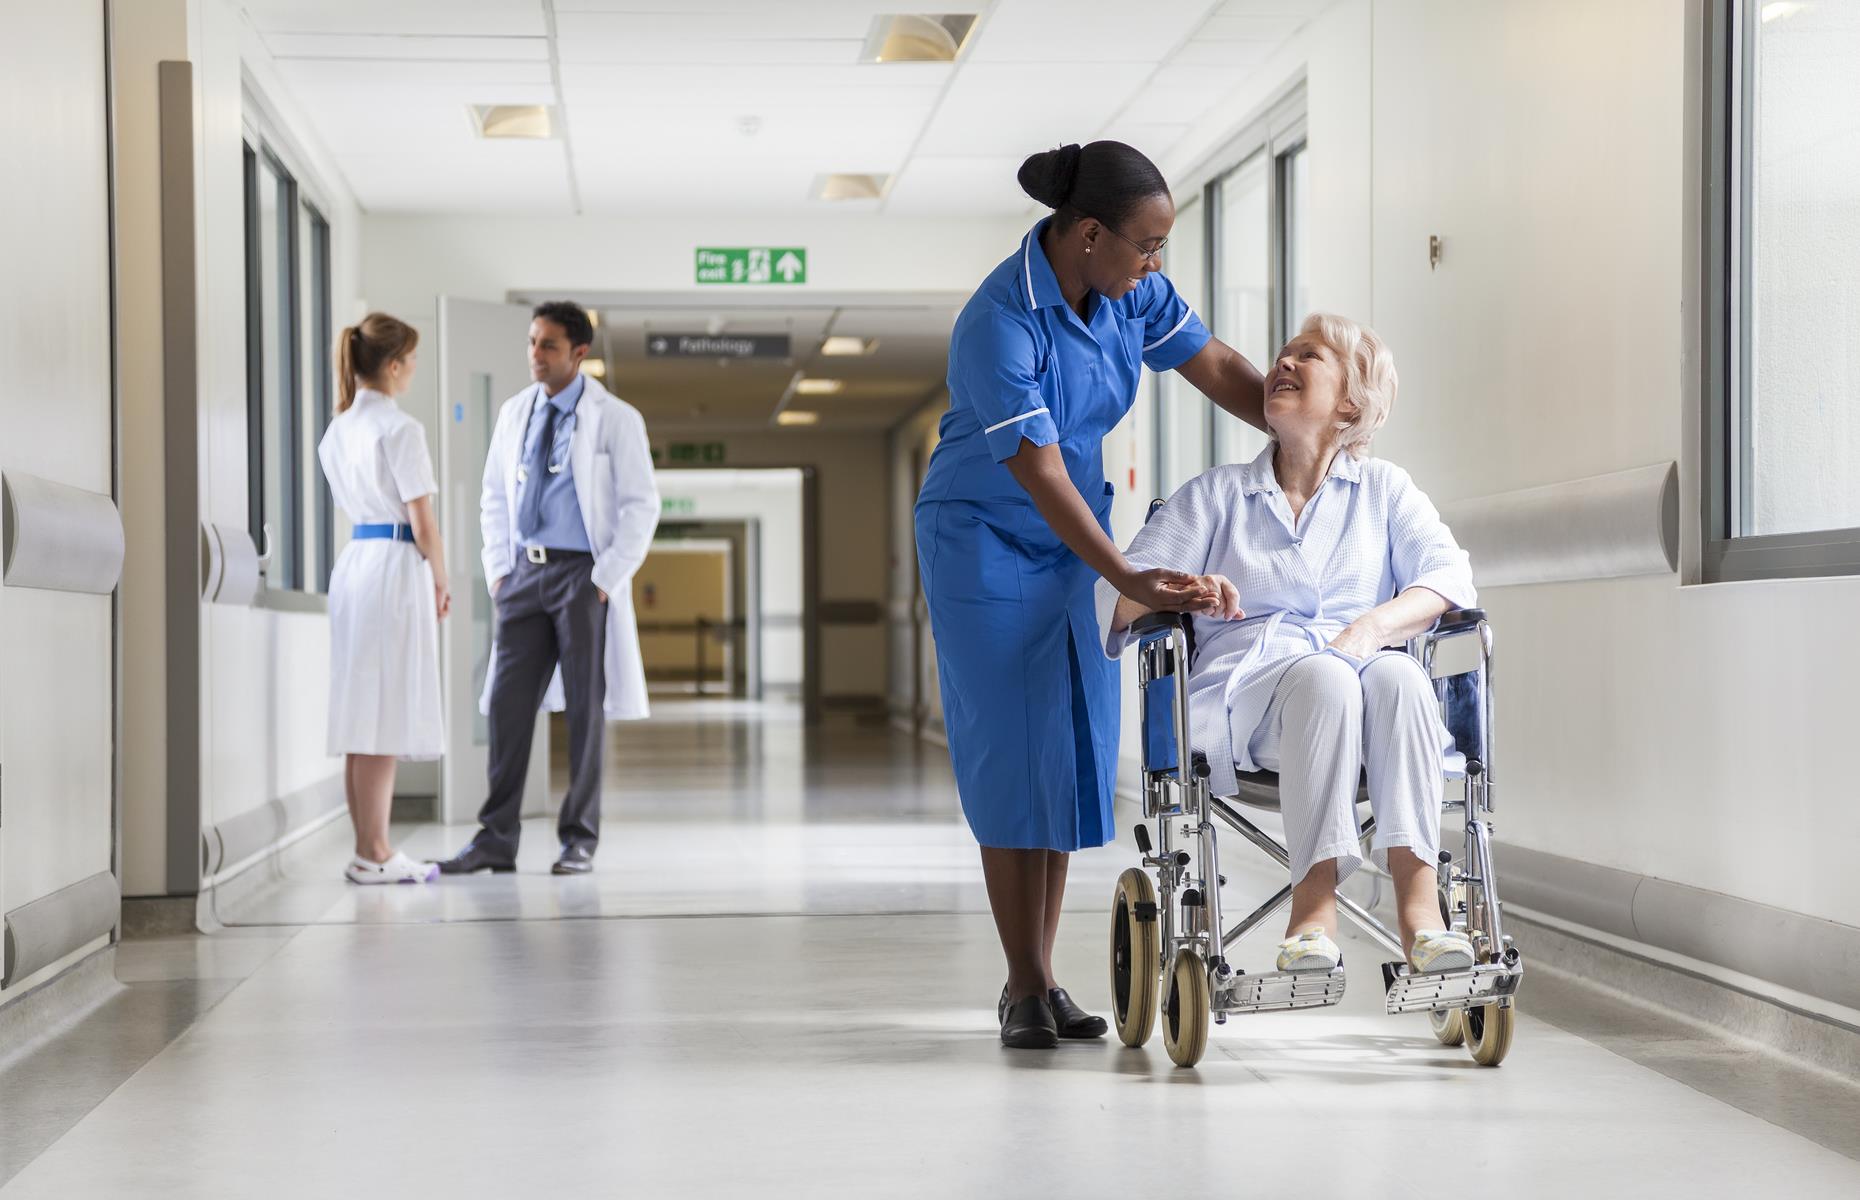 8. United Kingdom National Health Service: 1.34 million employees